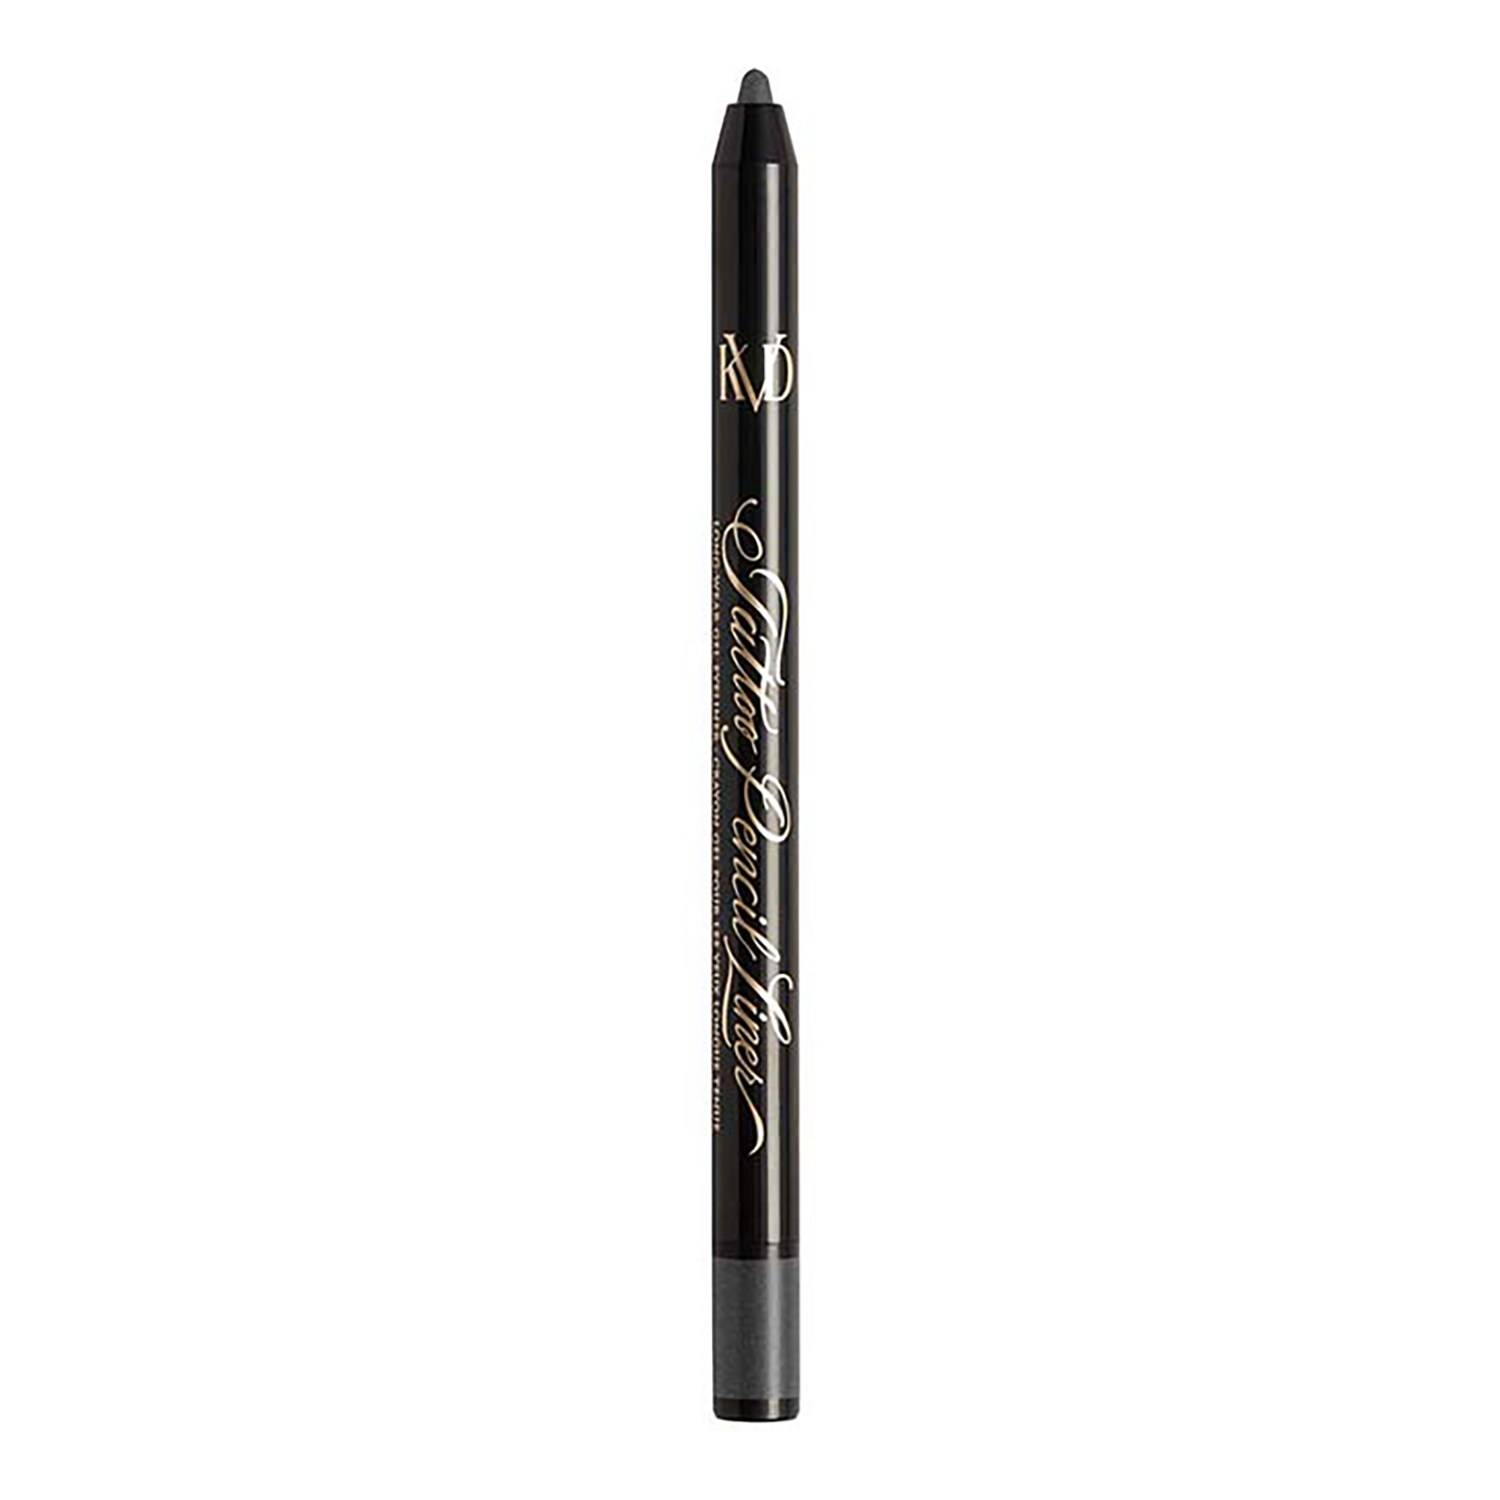 Kvd Beauty Tattoo Pencil Liner 0.5G Chromite Black 55